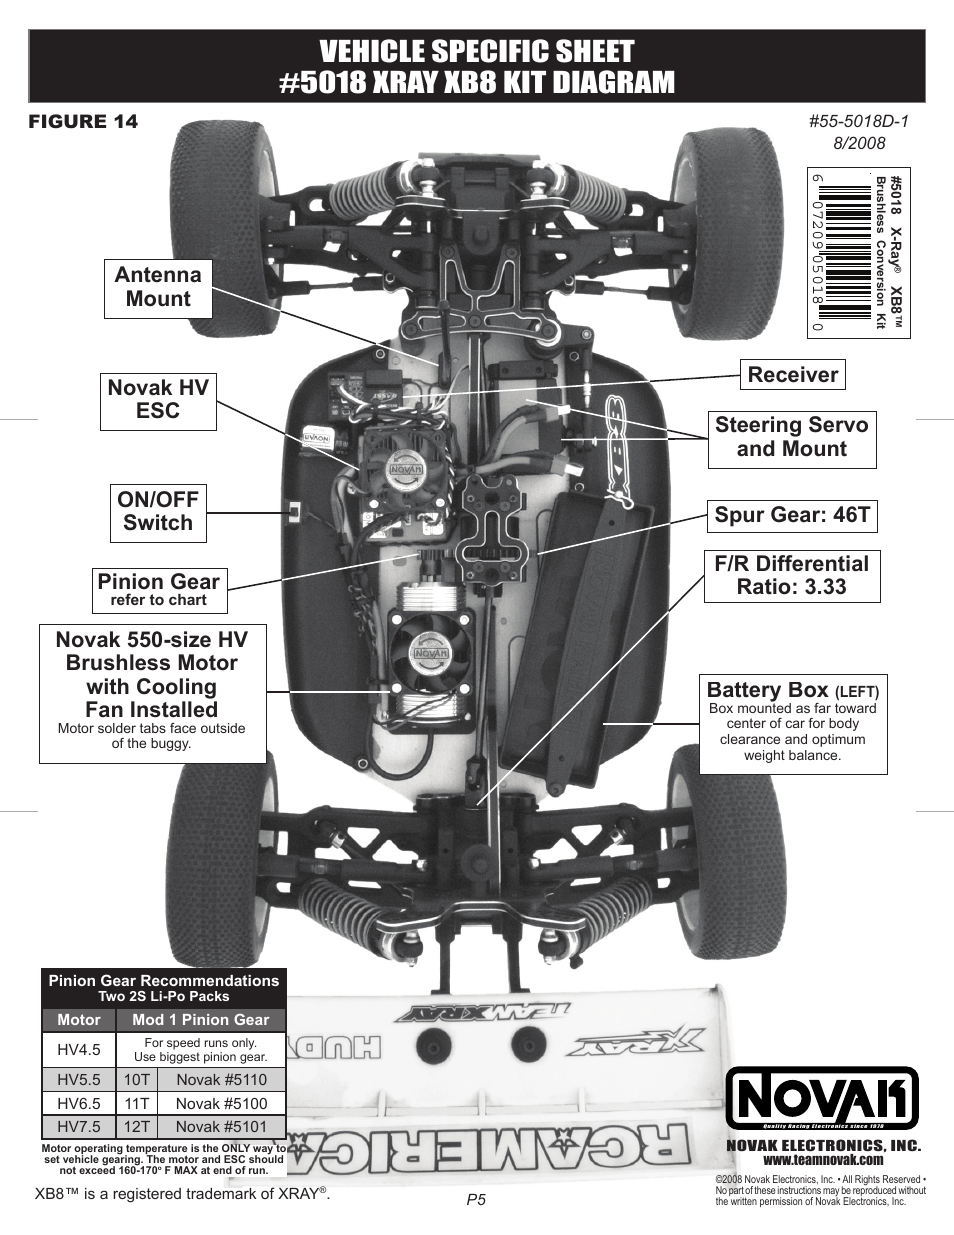 Novak Conv. Kit Vehicle Sheet- XRAY XB8 (55-5018D-1) User Manual | 1 page